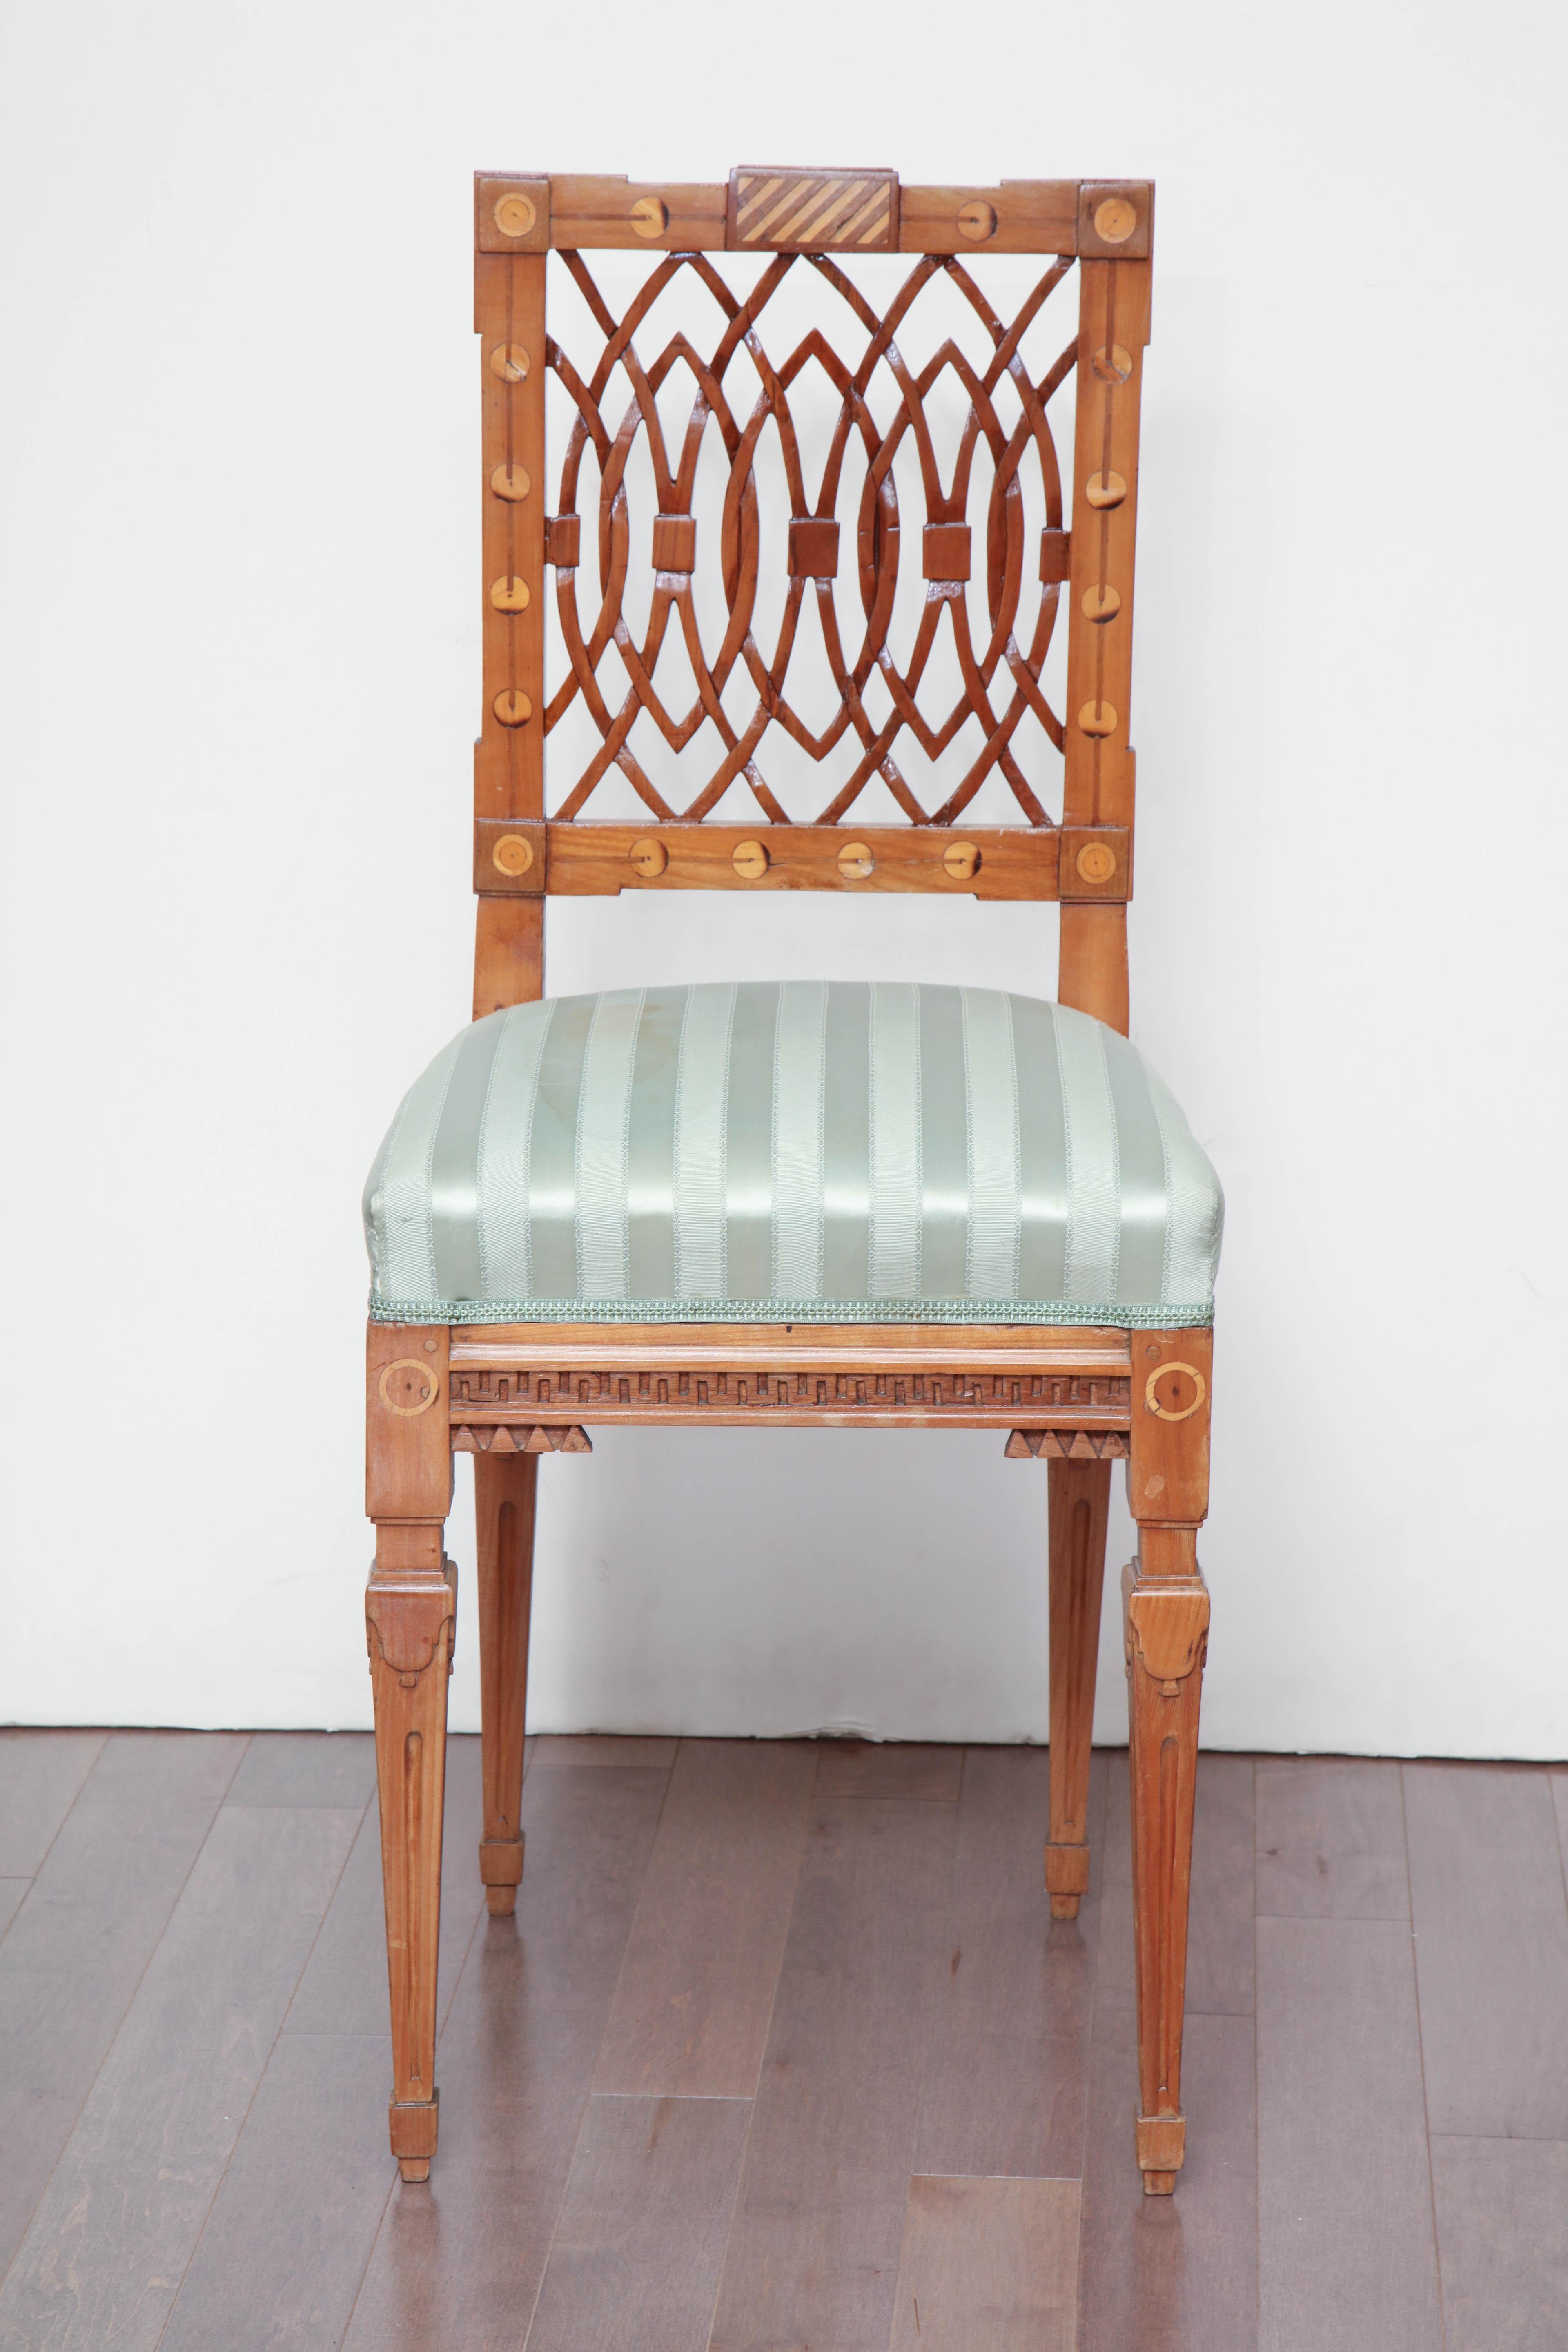 Early 19th century Italian side chair.